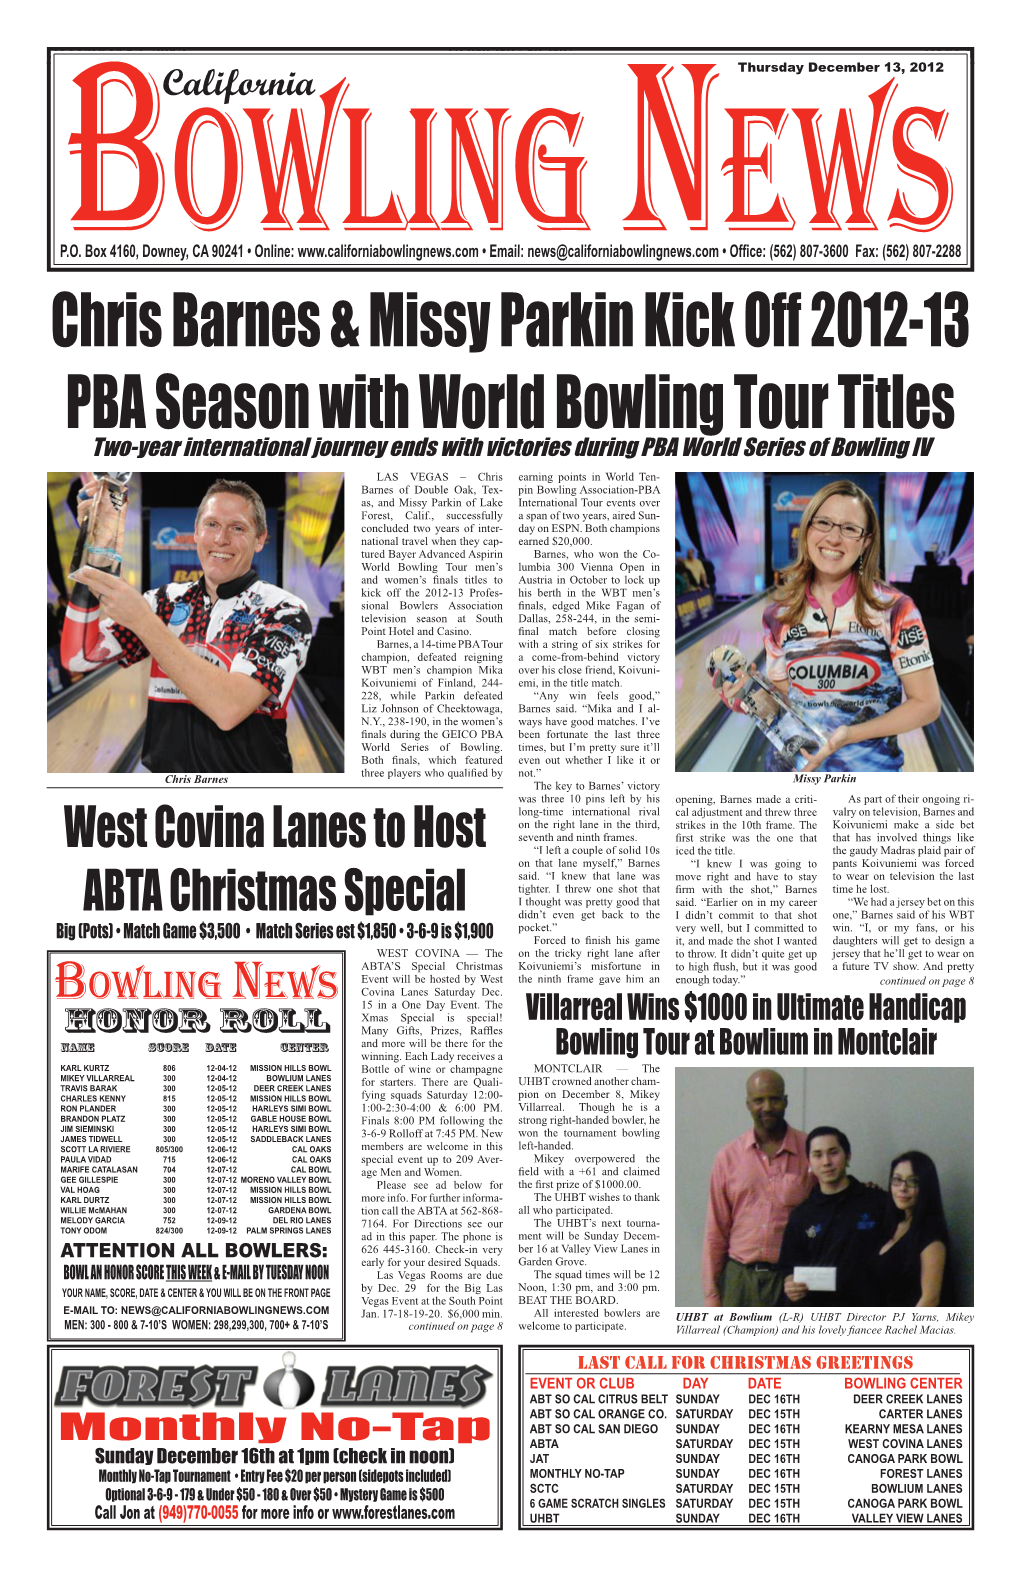 Chris Barnes & Missy Parkin Kick Off 2012-13 Pba Season with World